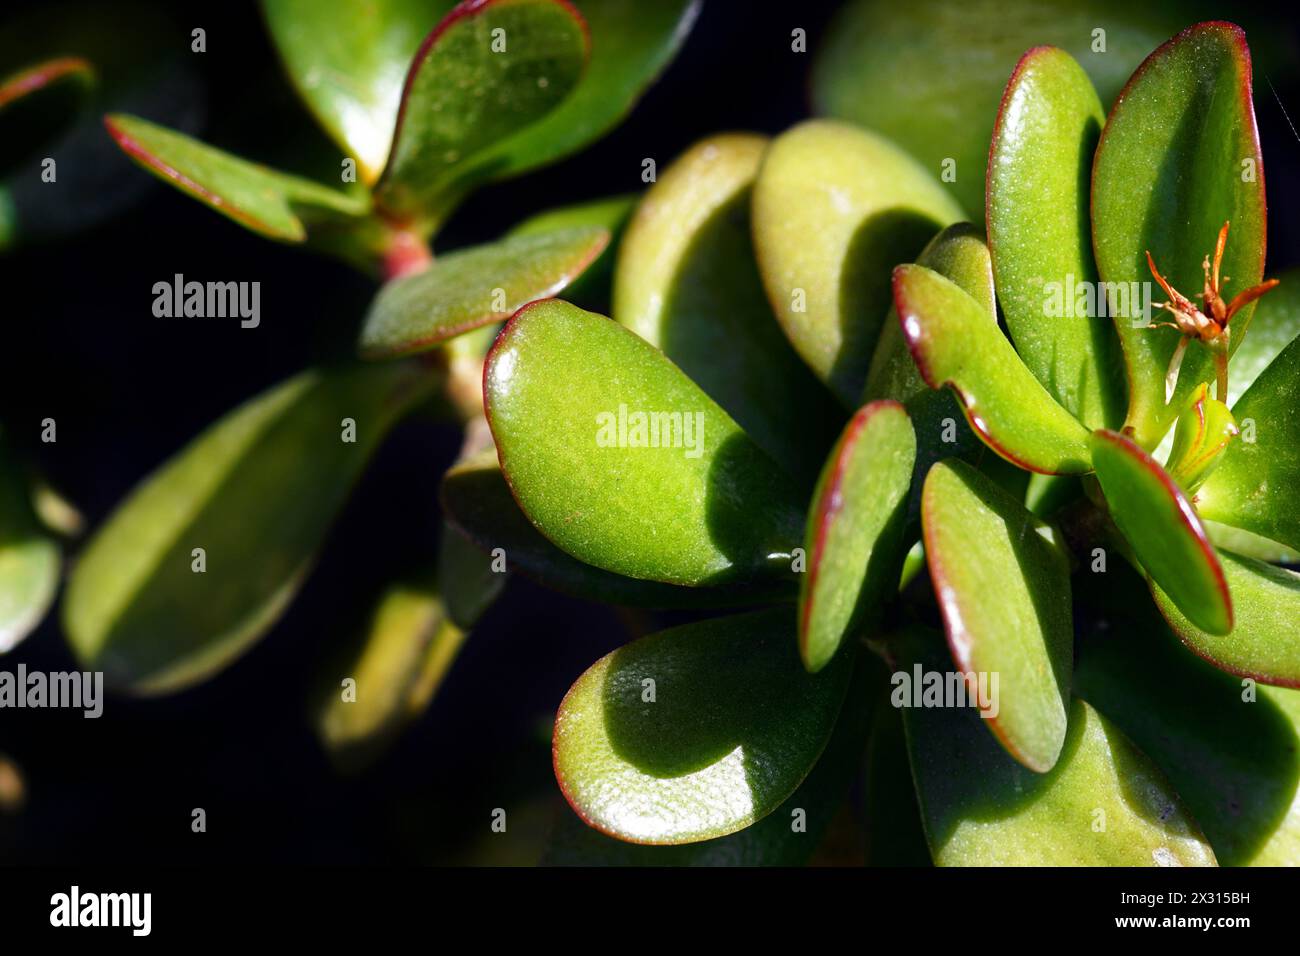 Close-up photograph of Crassula (Money plant) leaves illuminated by the sun Stock Photo